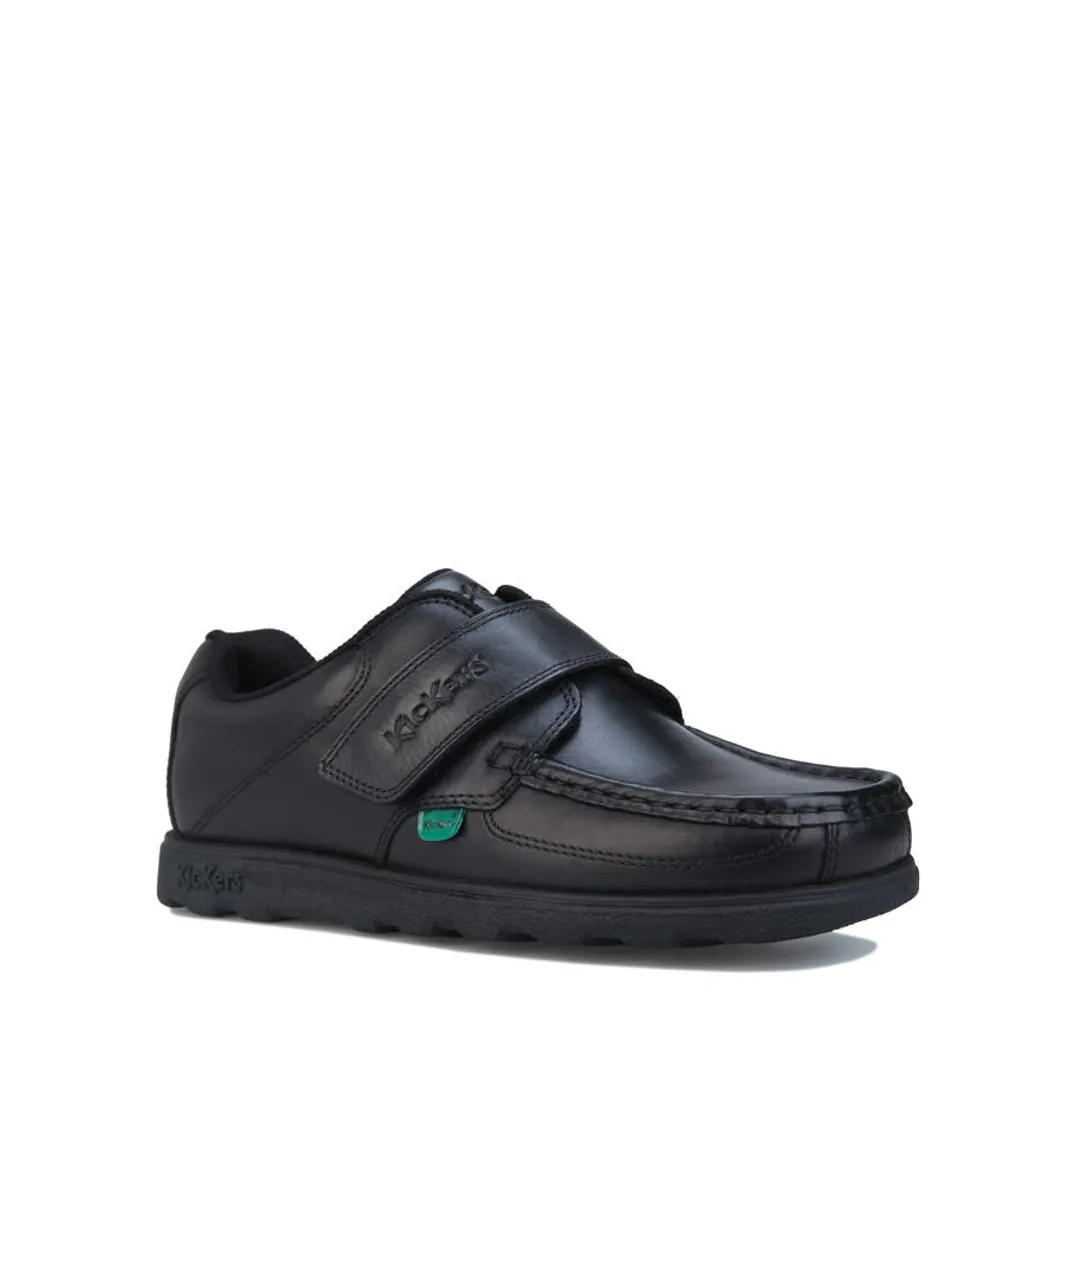 Kickers Boys Boy's Junior Fragma Strap Leather Shoe in Black